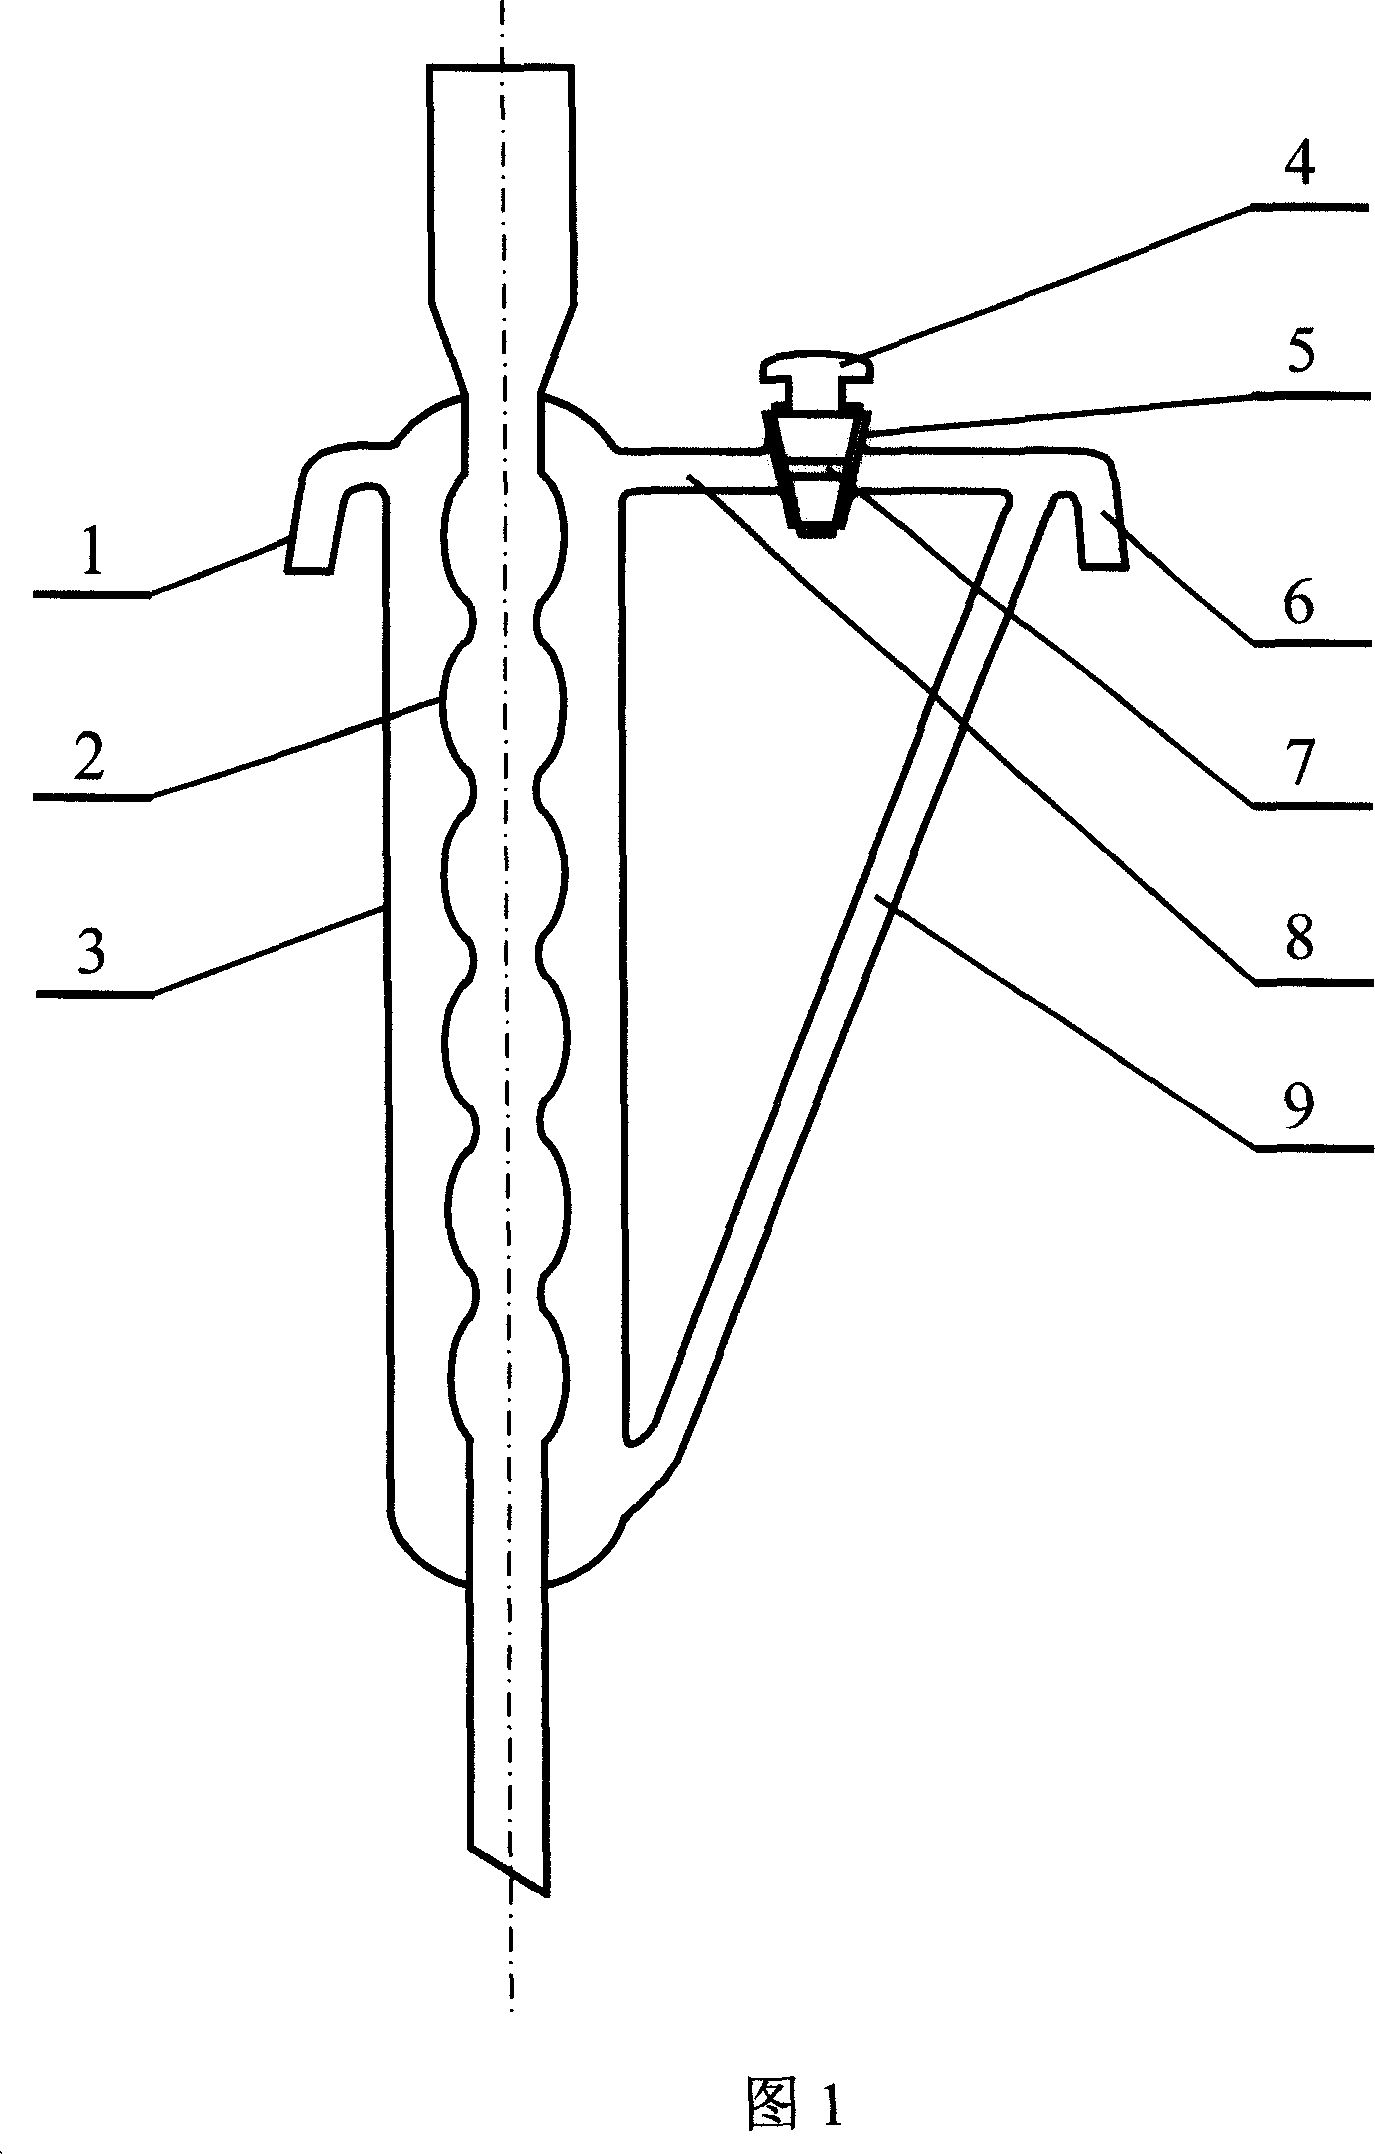 Counter-flow type return-flow condensation pipe